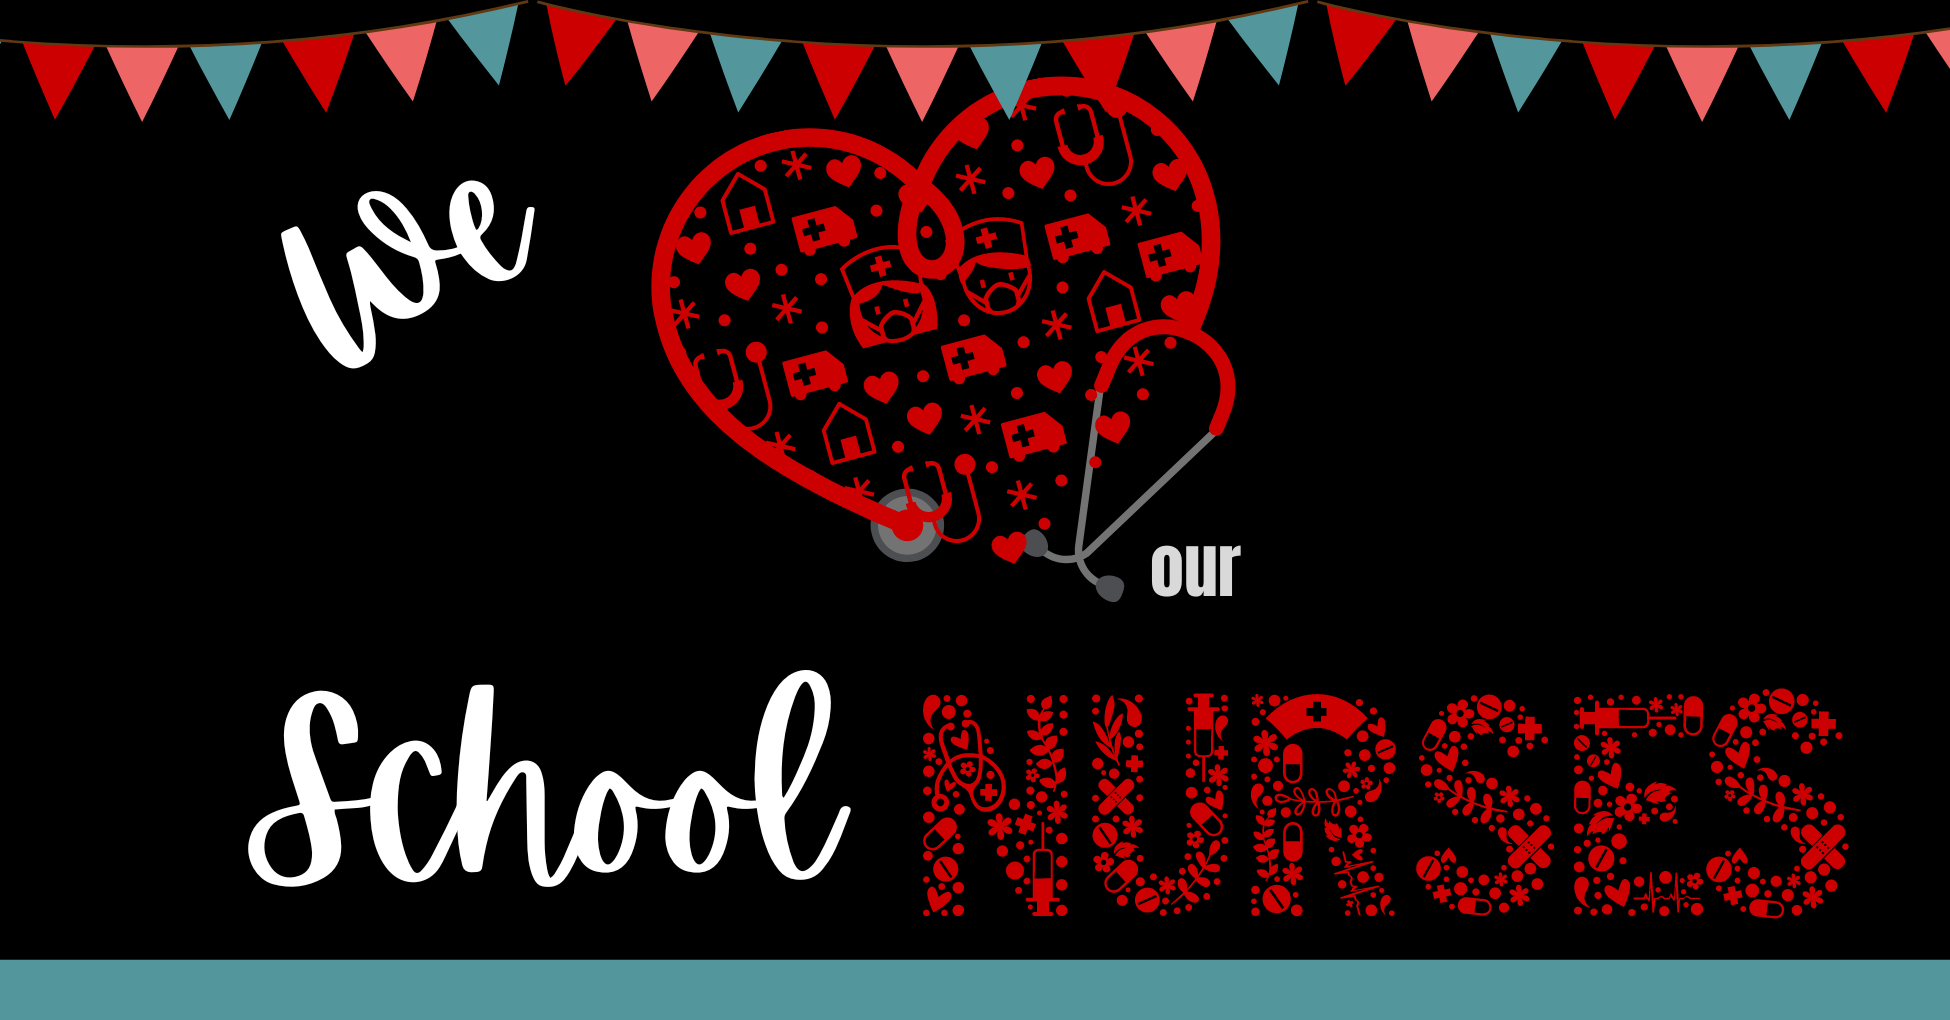 National School Nurses Day